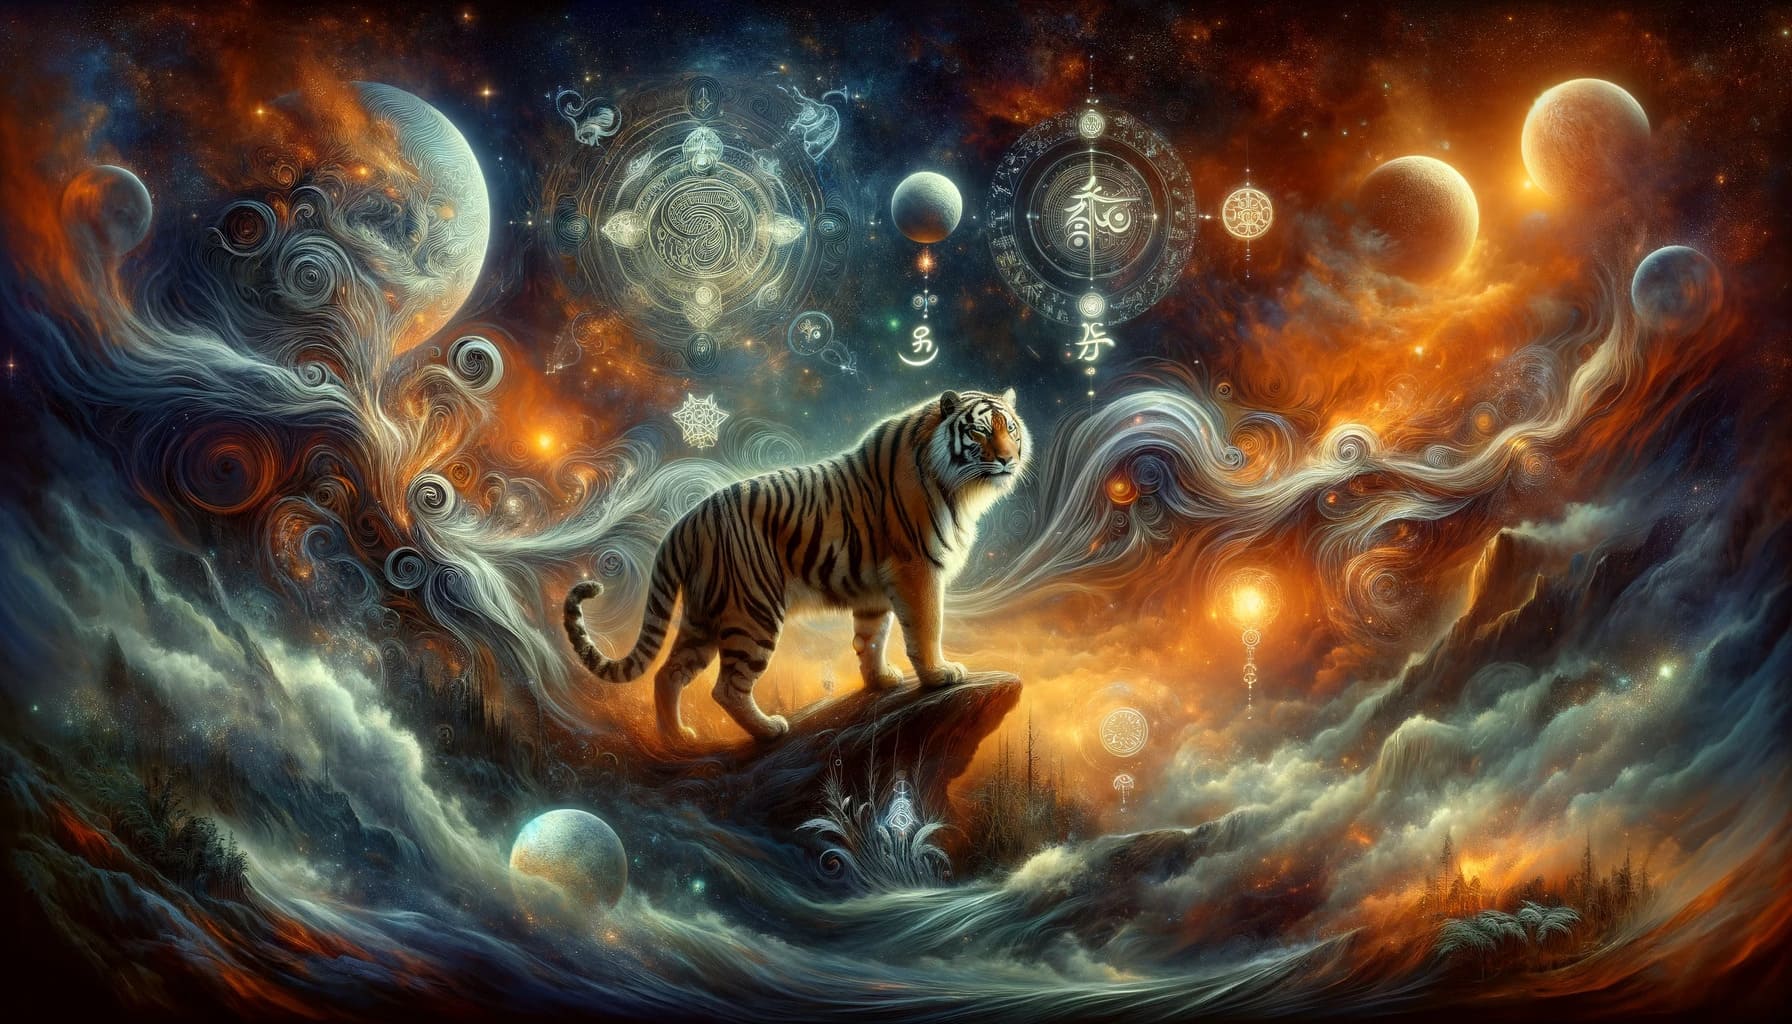 Dream of tiger